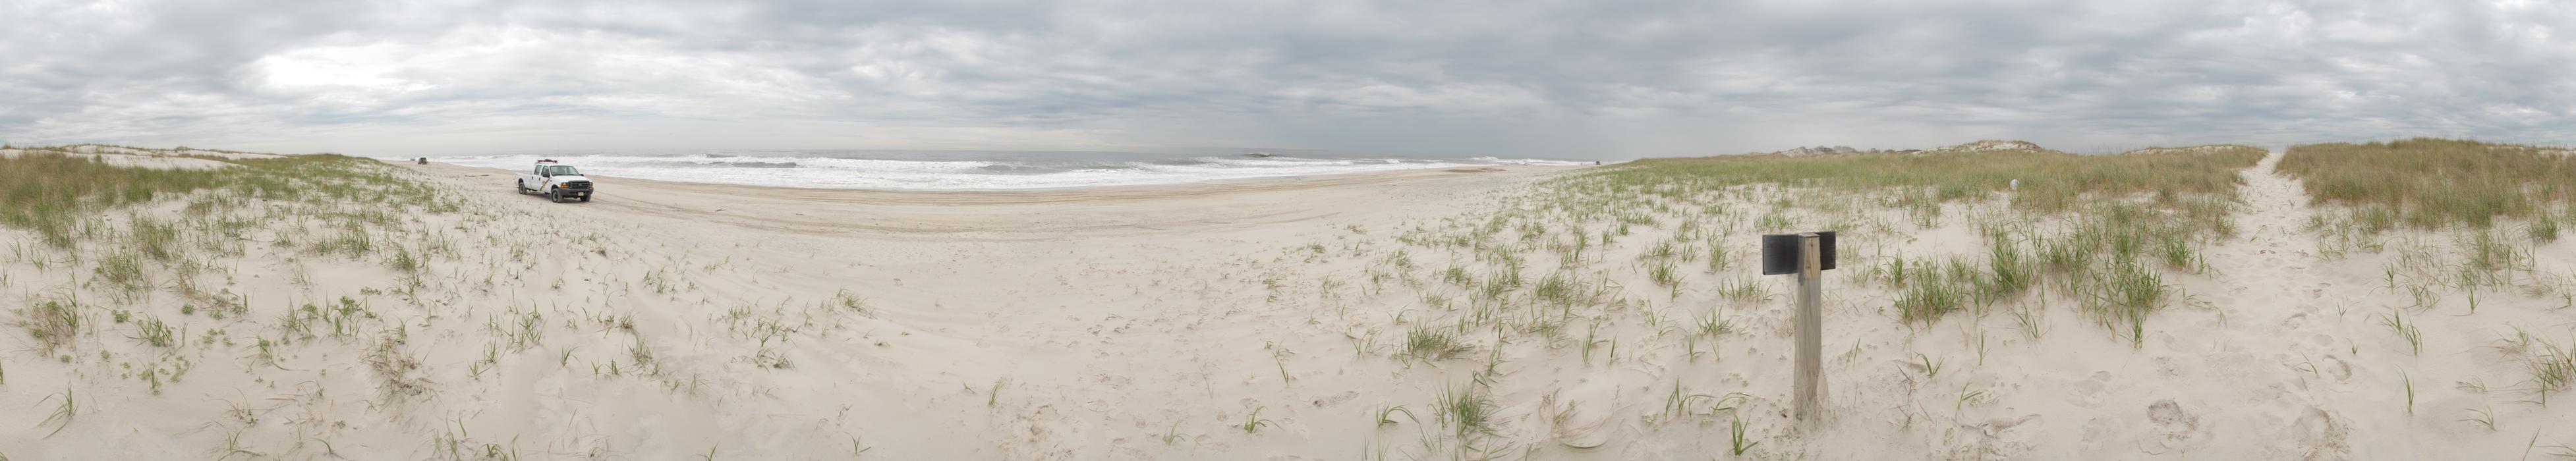 beach, dunes, ocean, panoramic, sand, sign, waves